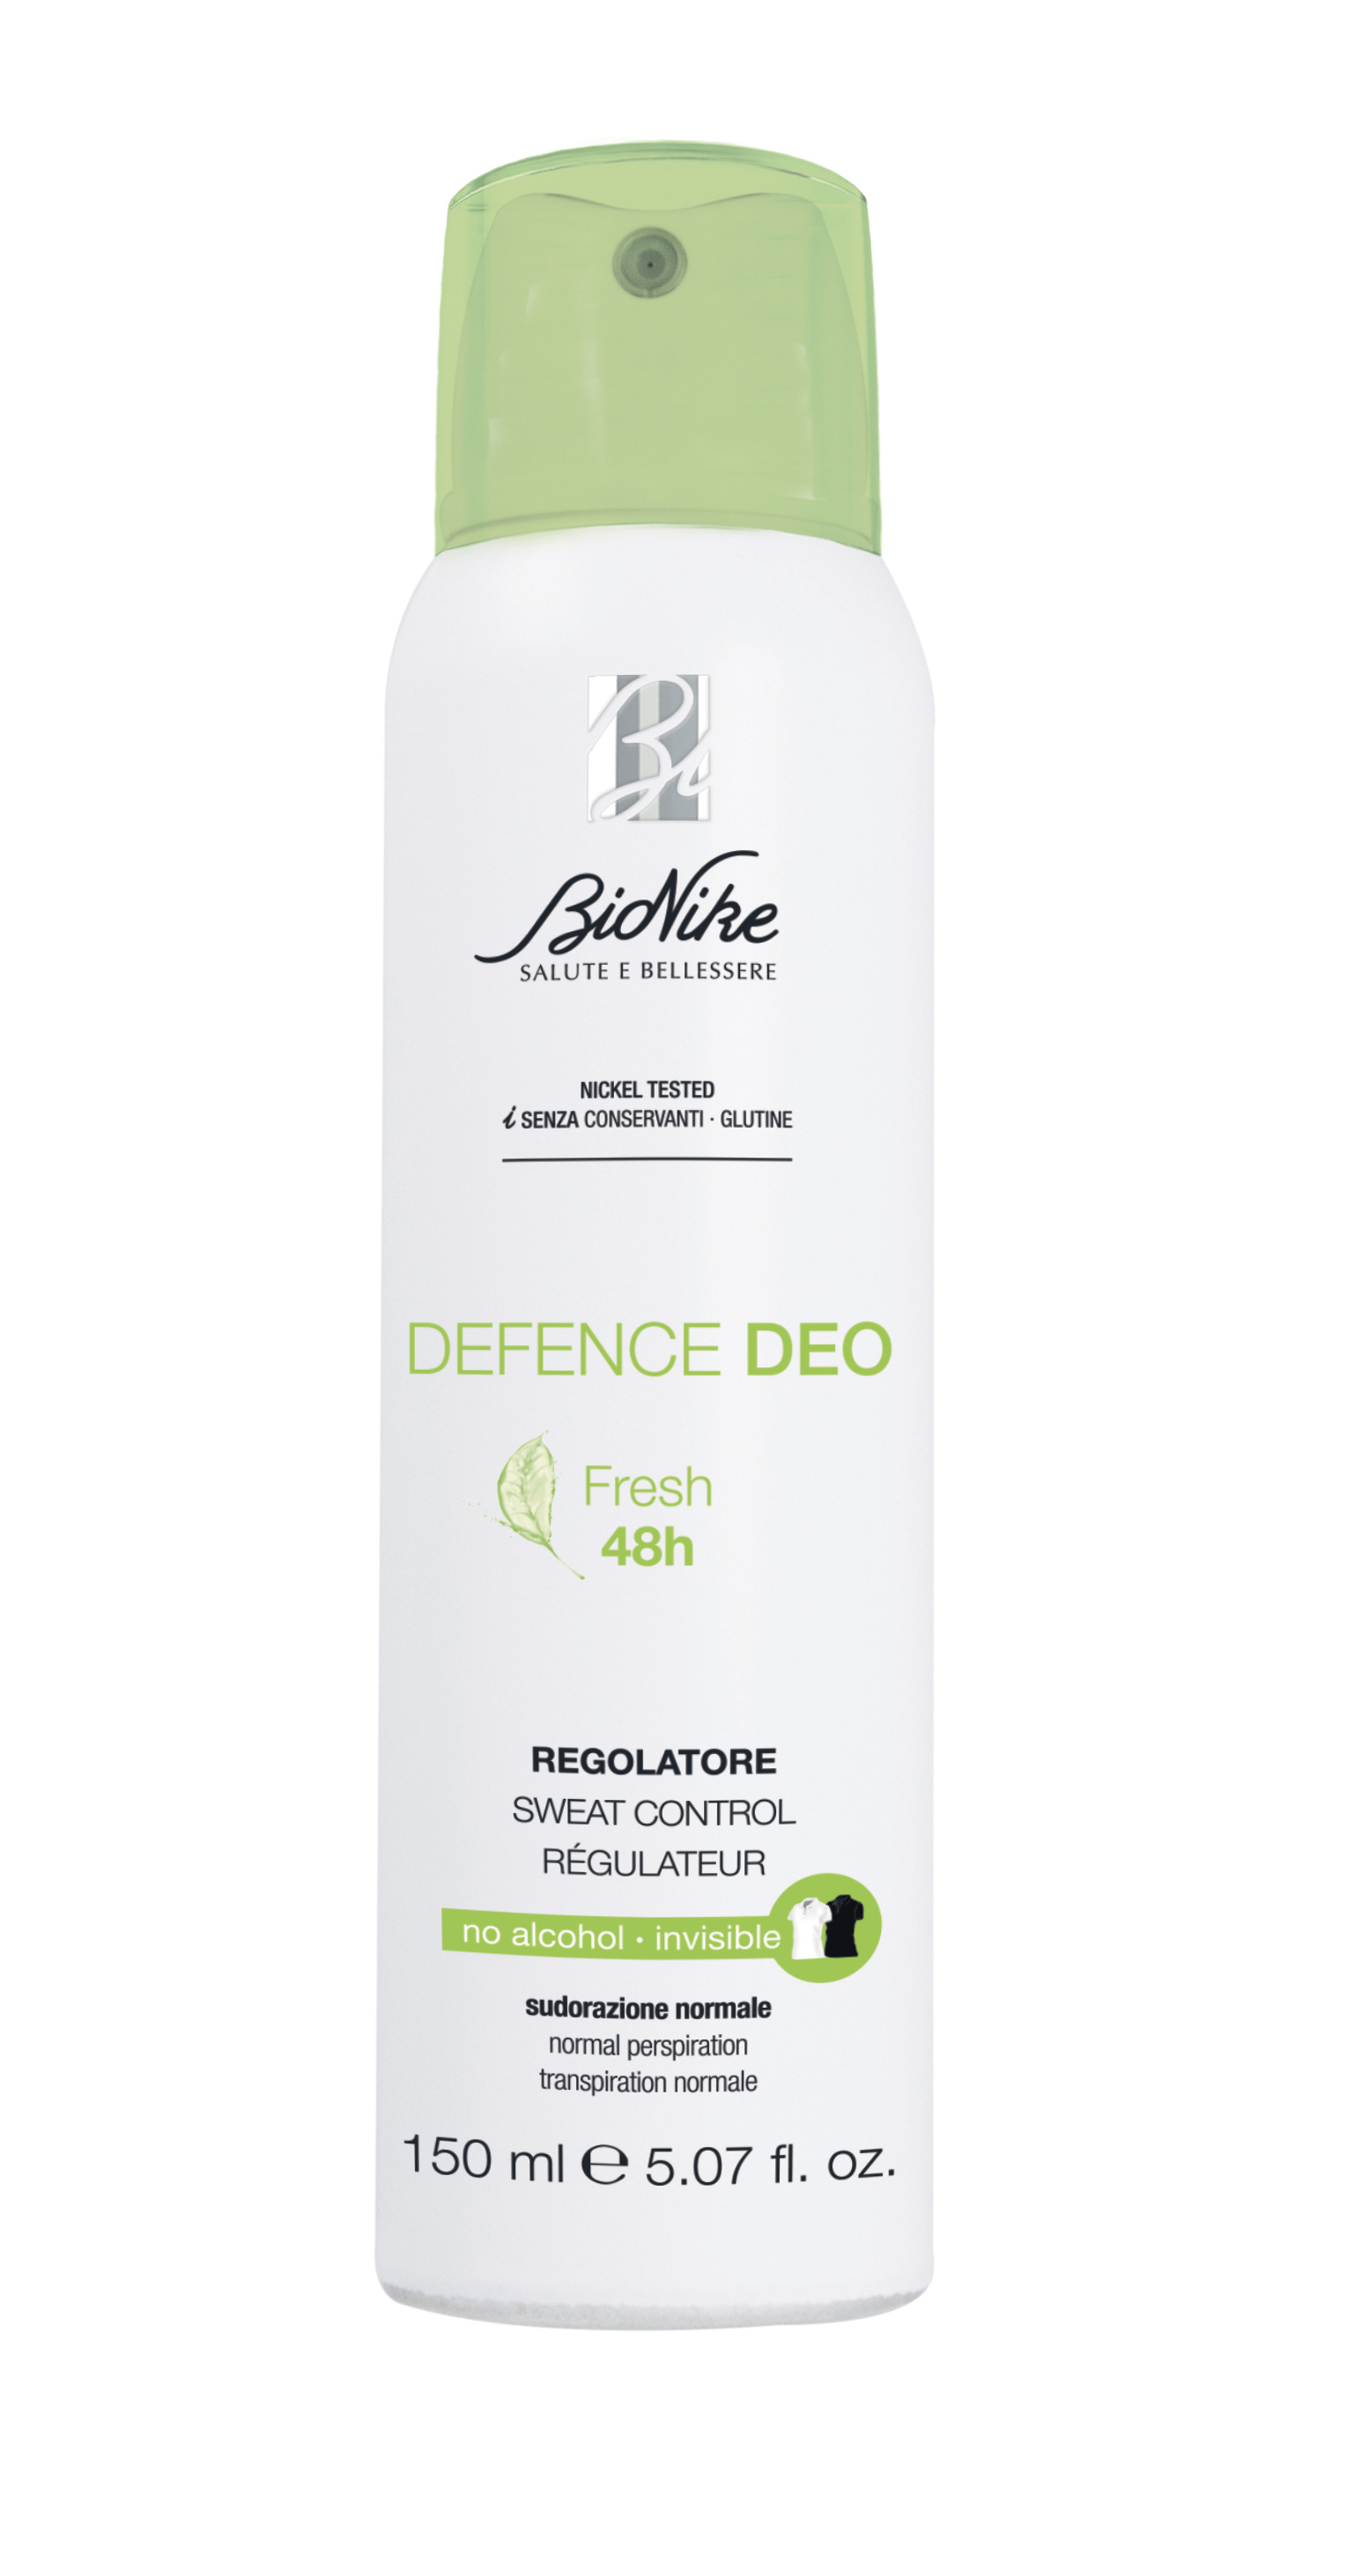 Image of Defence Deo Fresh 48h Spray BioNike 150ml